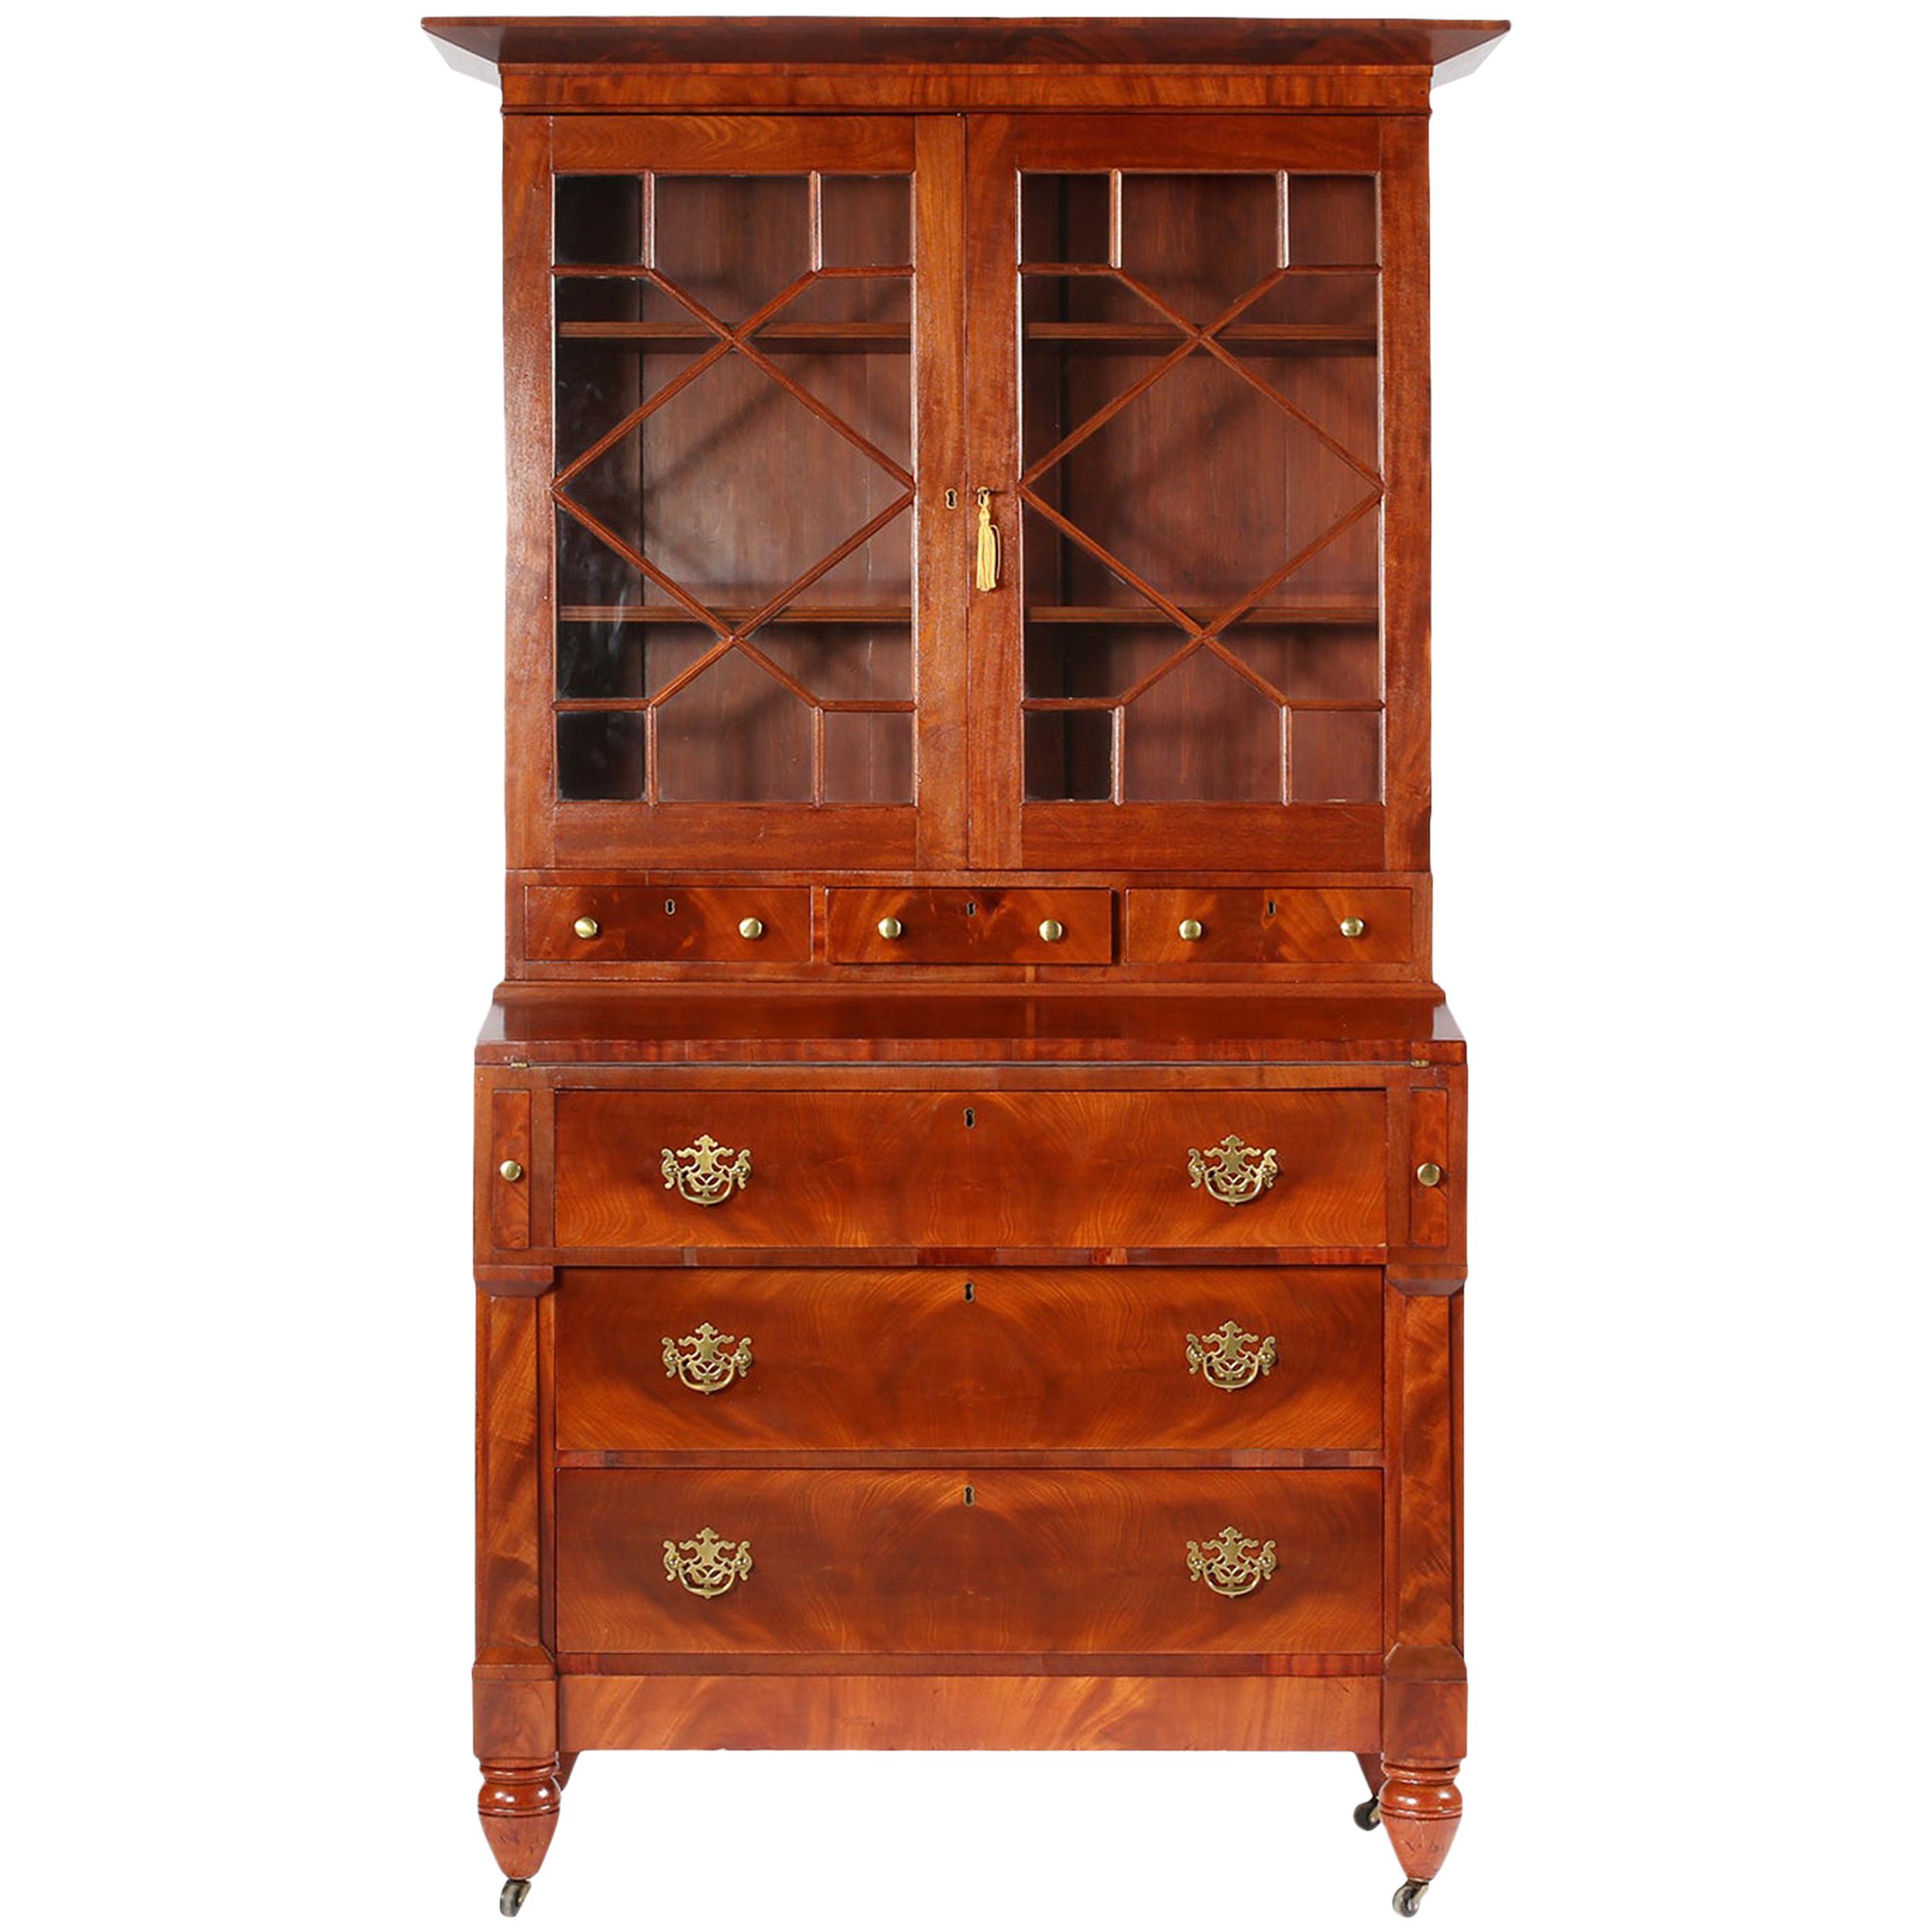 Early 19th Century Classical English Regency Bookcase Secretary Desk